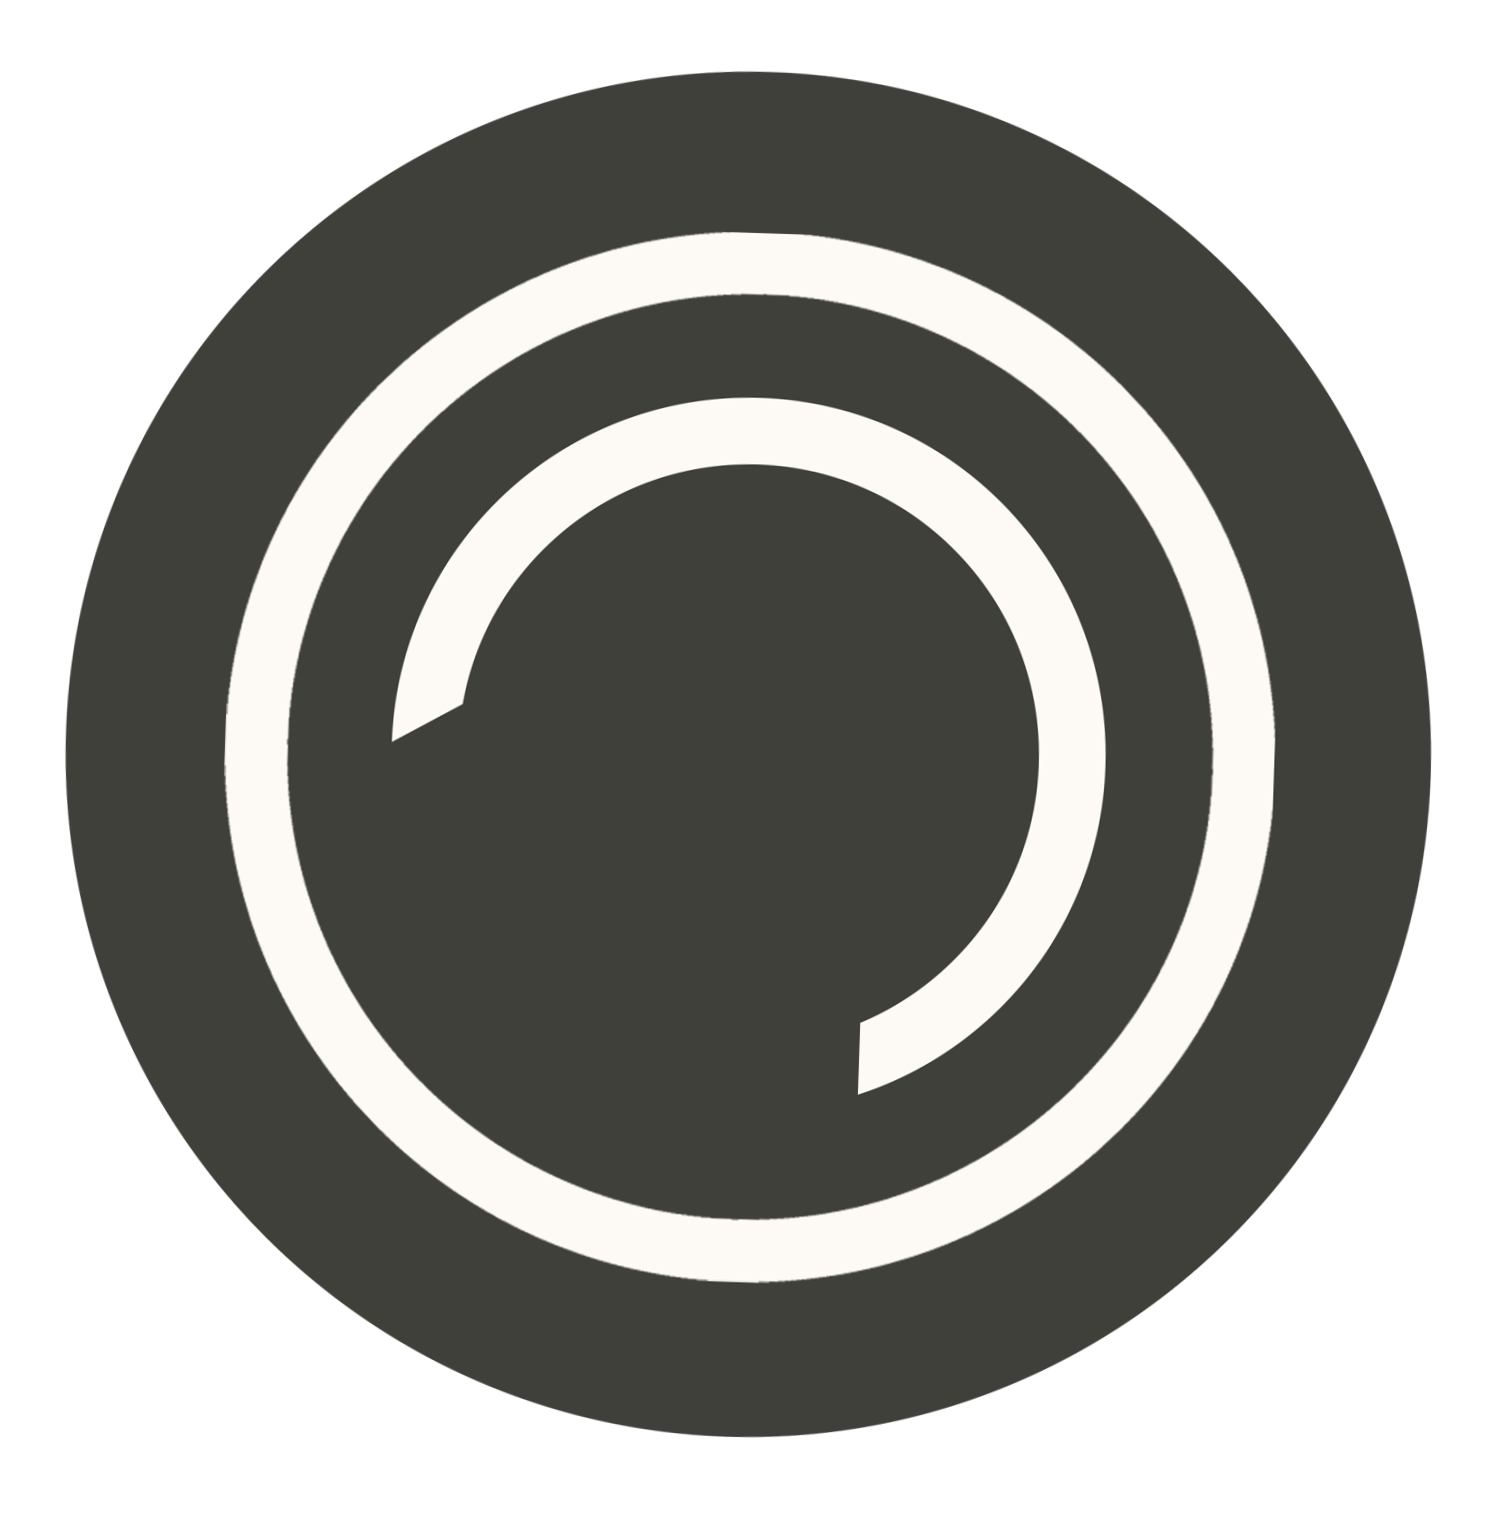 Plink podcast links logo mark